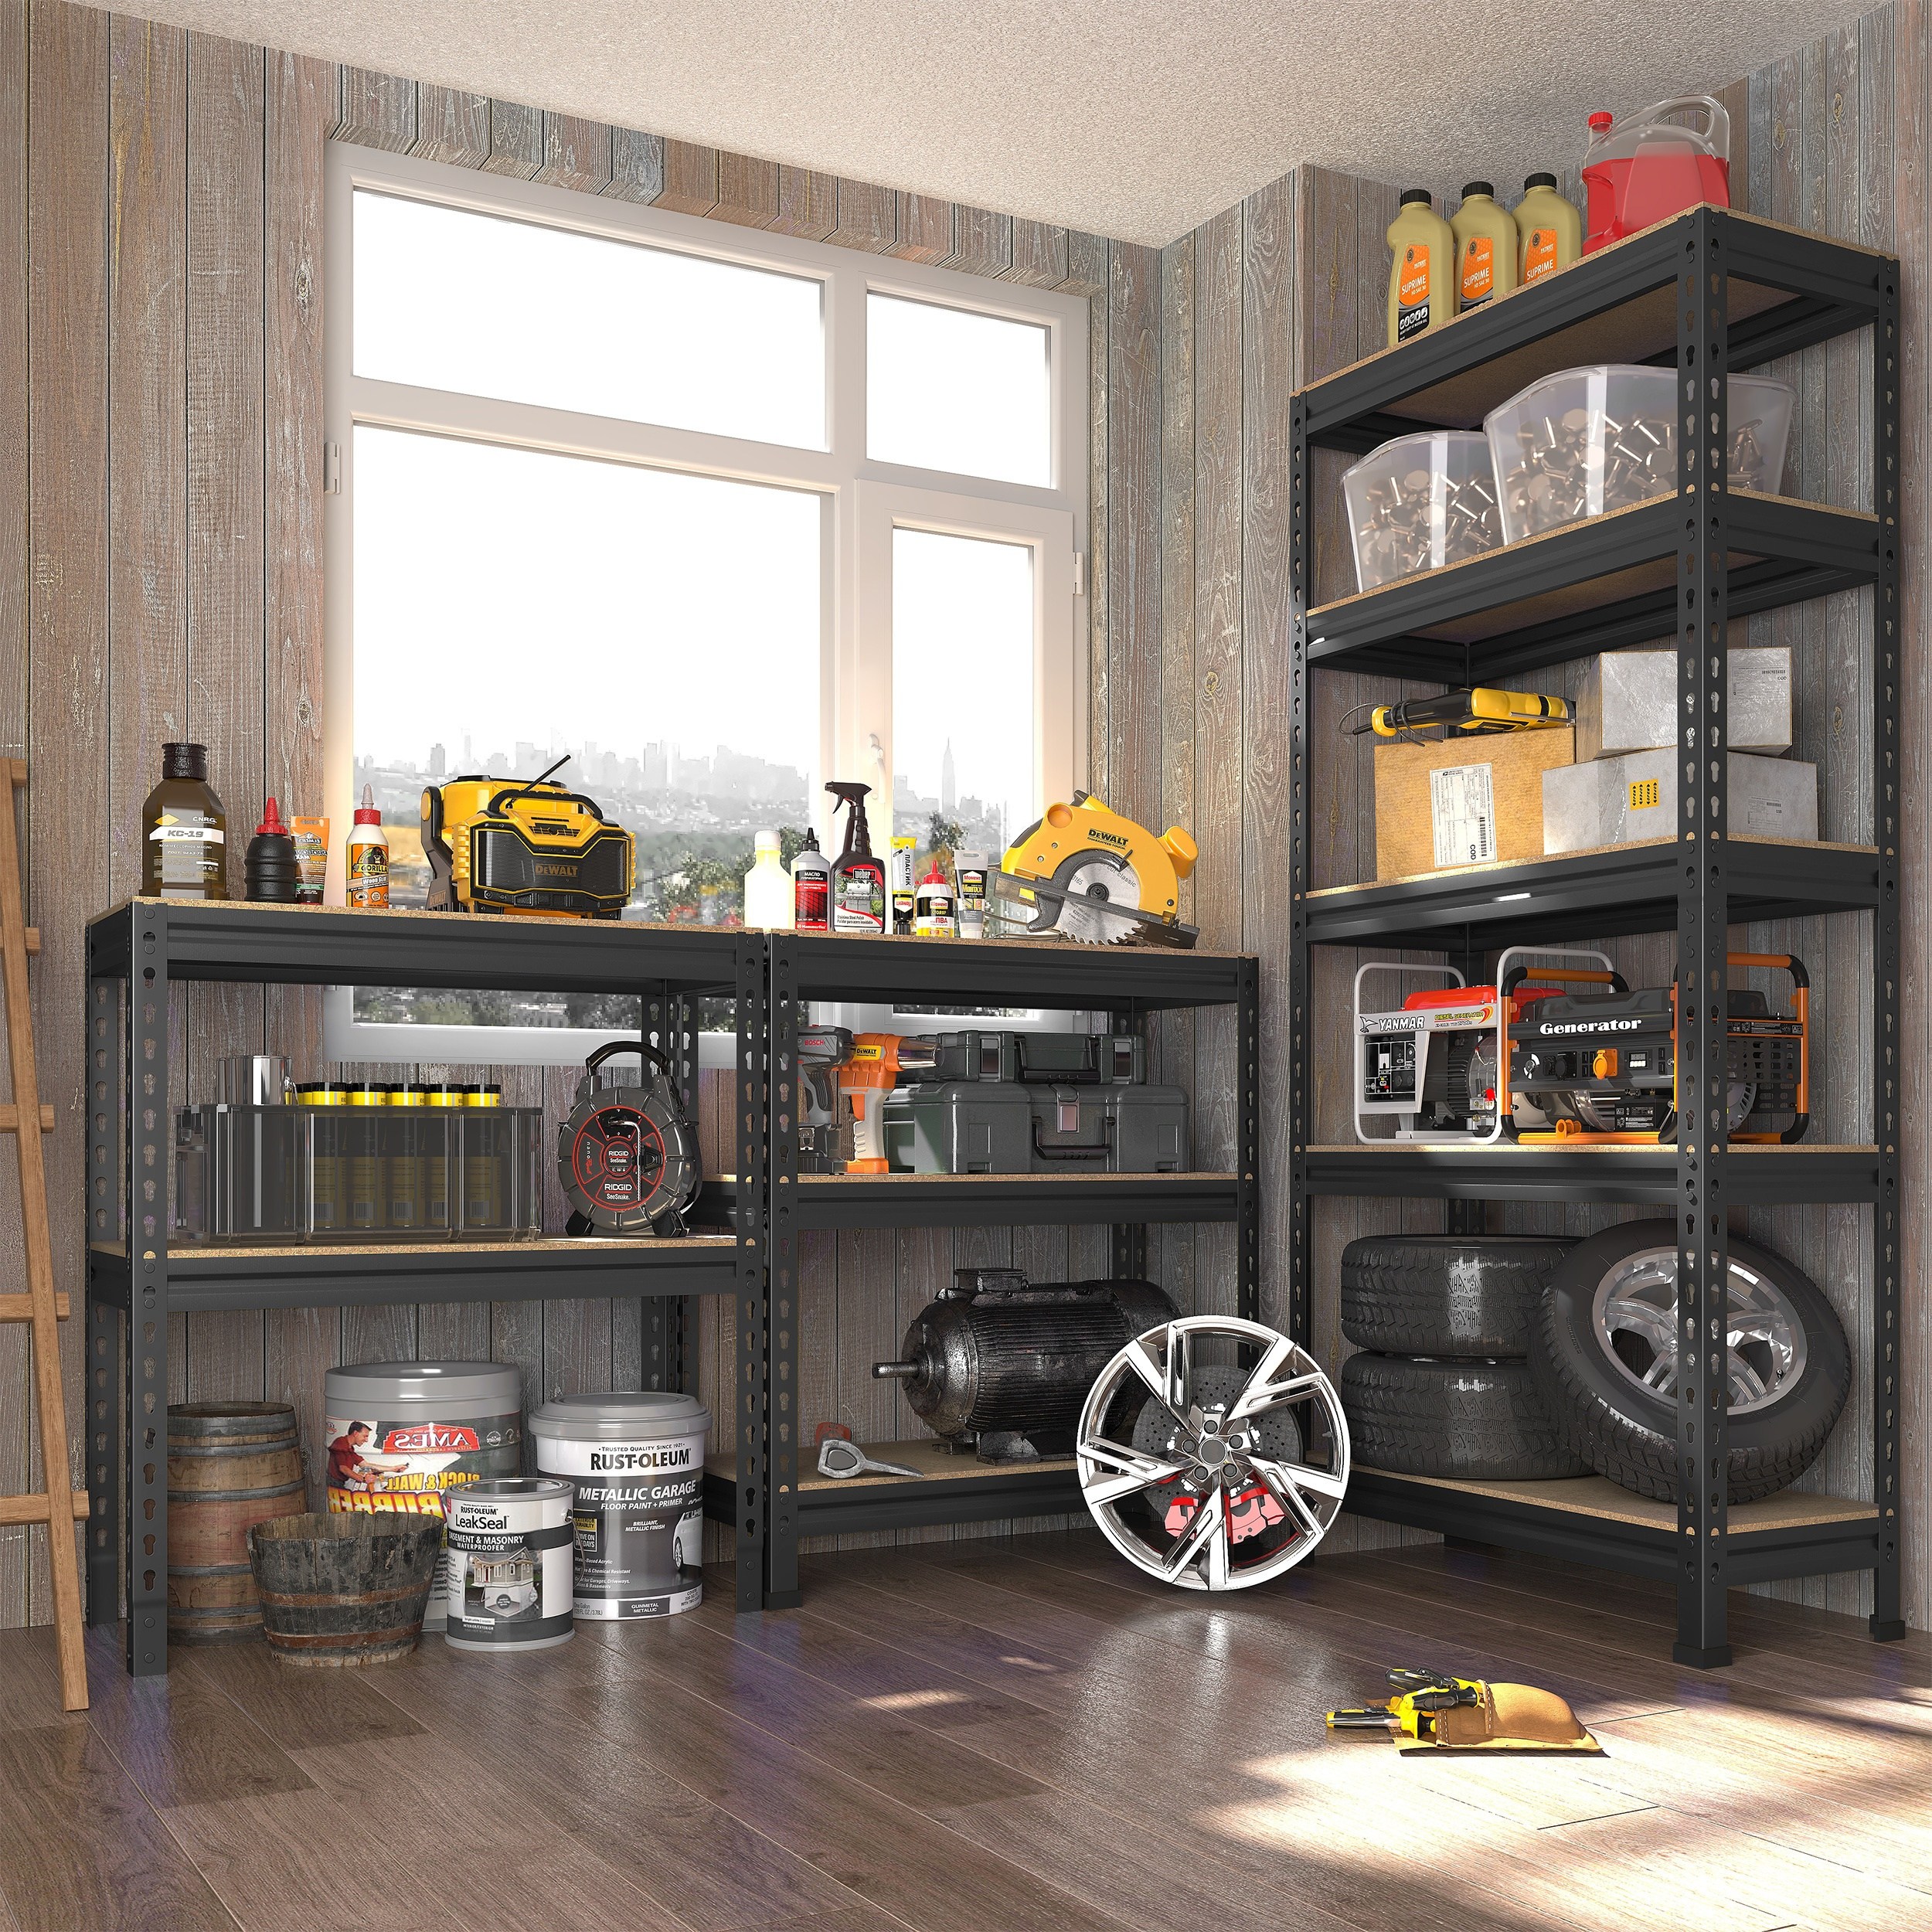 

1pc Storage Shelves 5 Tires, Adjustable Metal Storage Shelving, Heavy Duty Shelf For Garage, 1325lbs, 27.5"x 12"x 59"